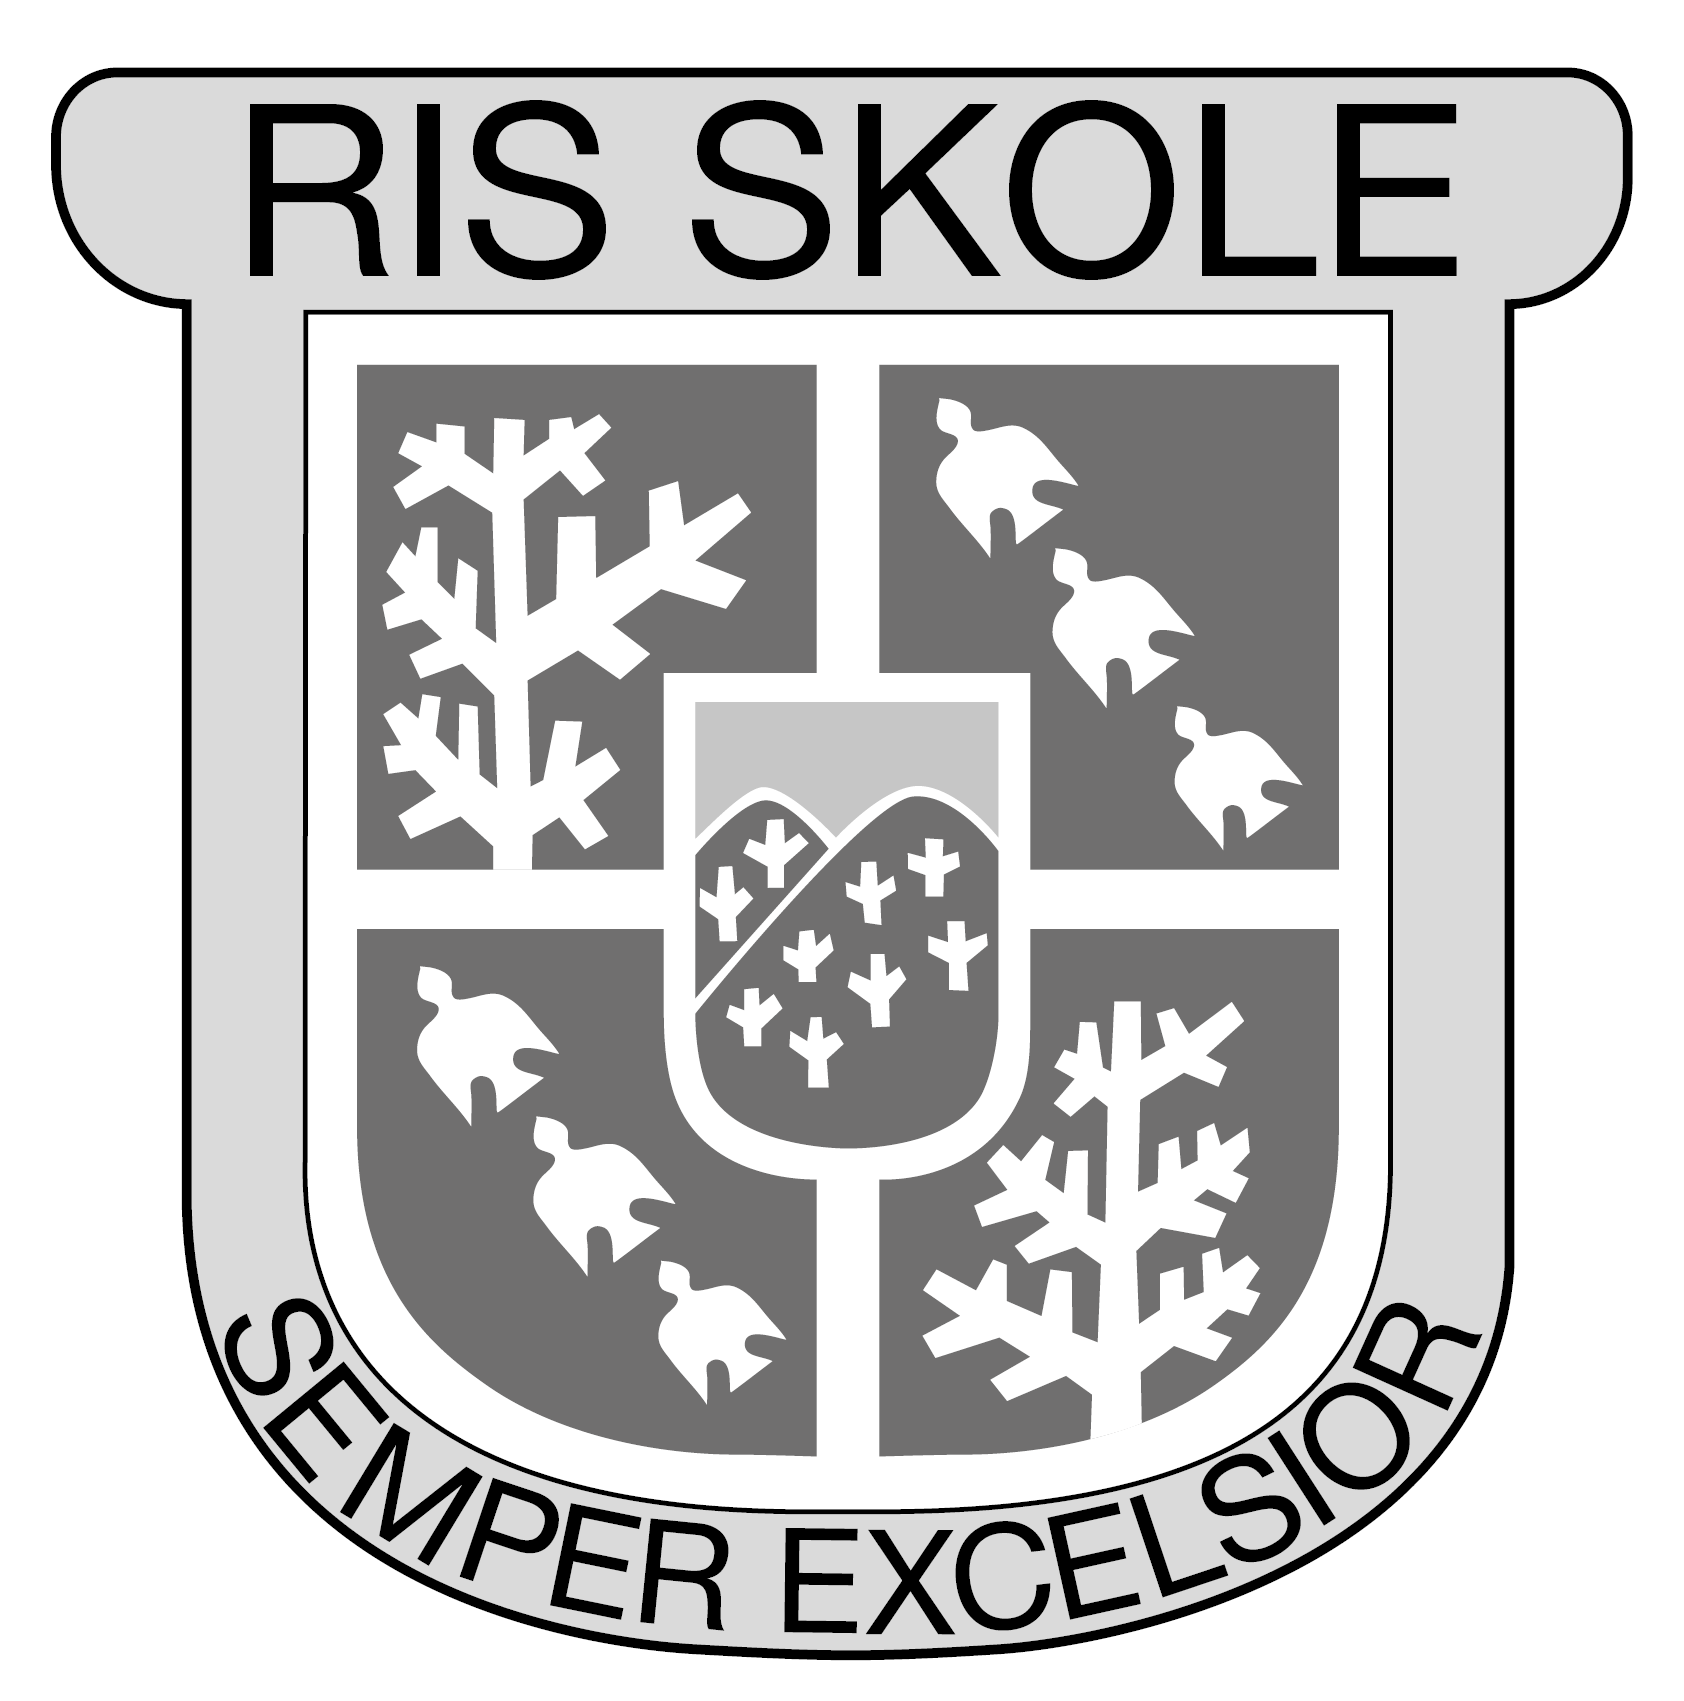 Ris skole logo